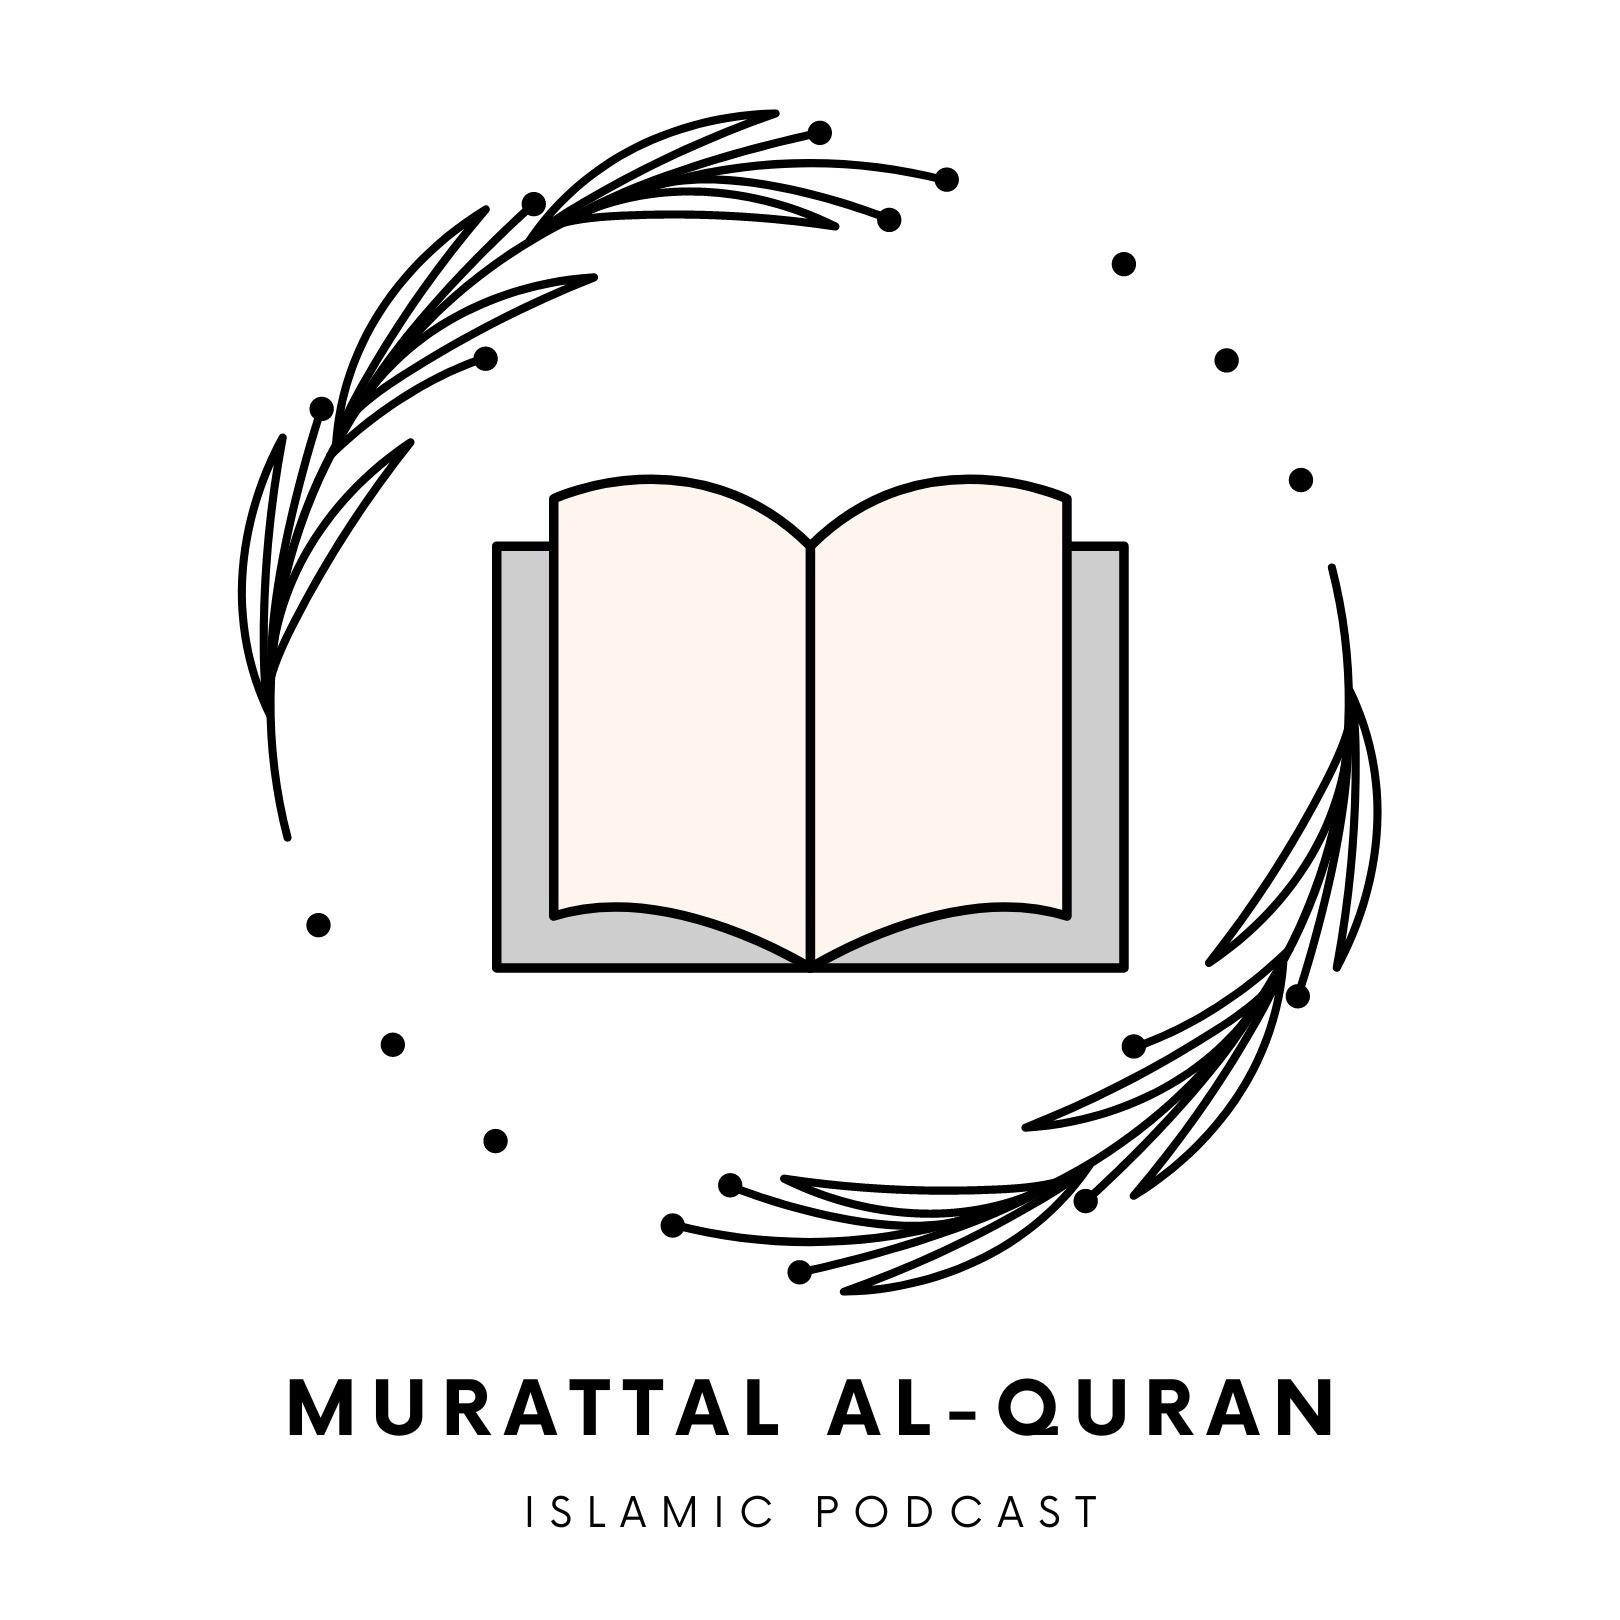 Murattal Al-Quran